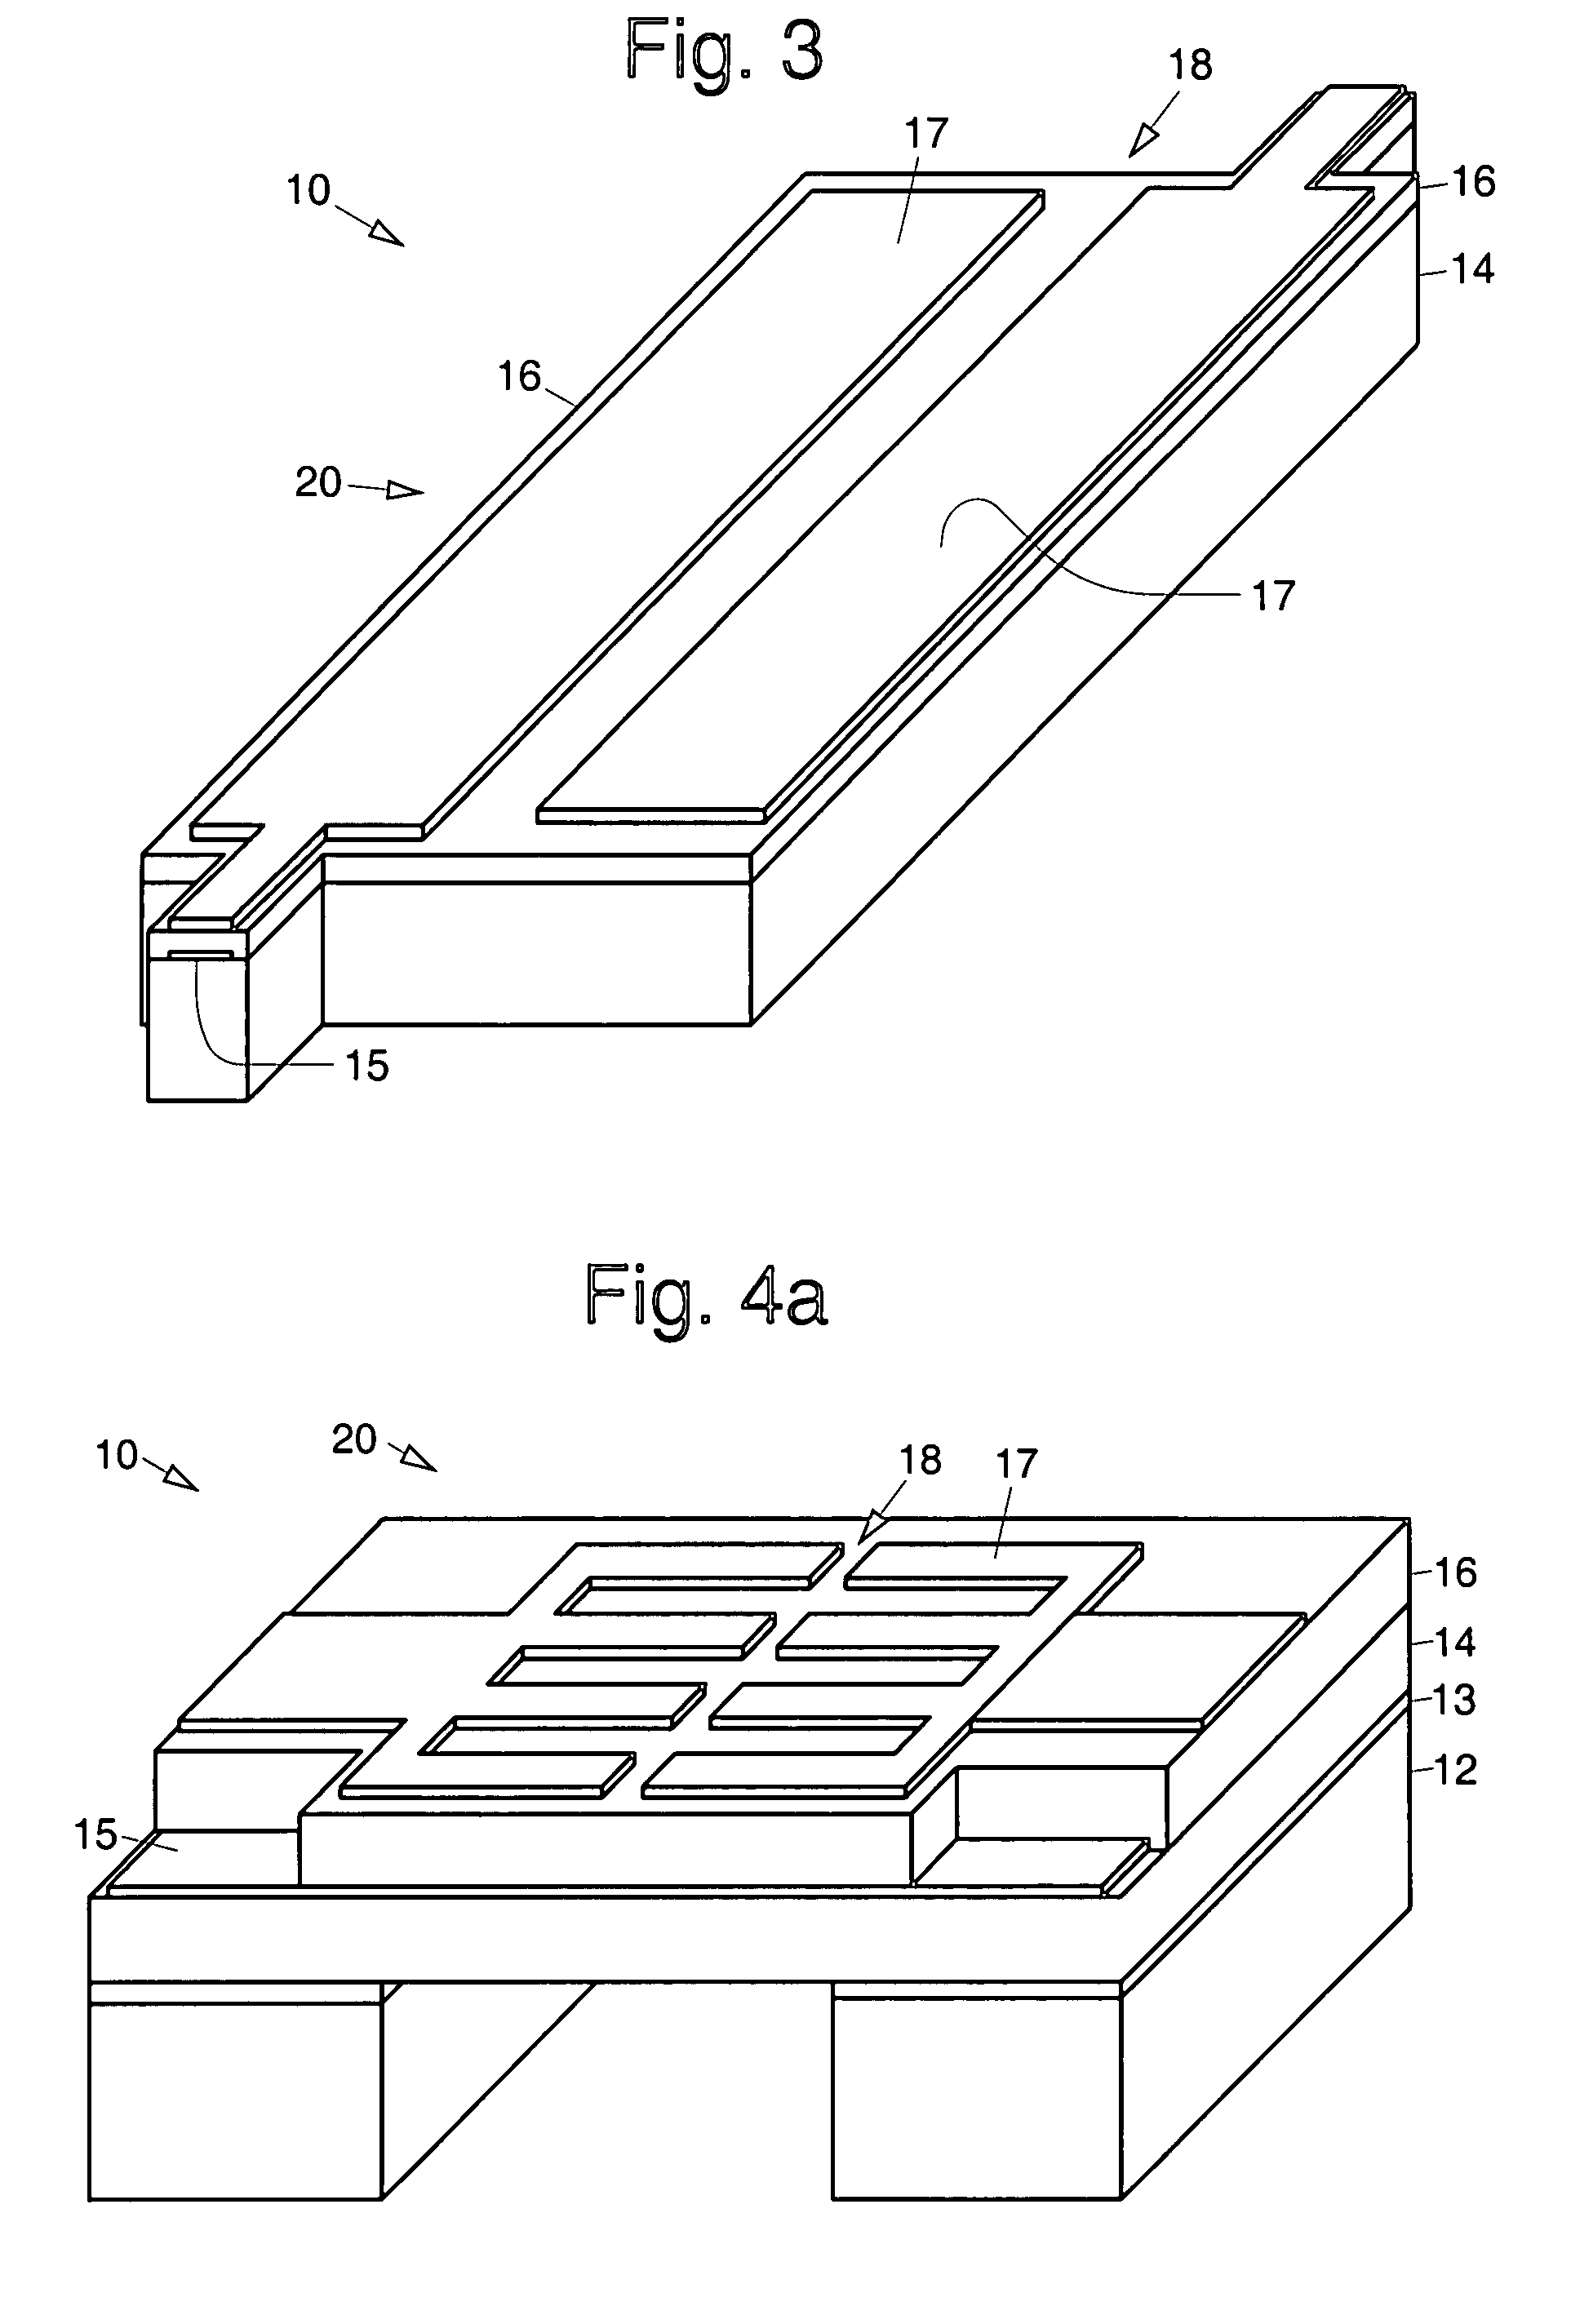 Monolithic thin-film piezoelectric filters